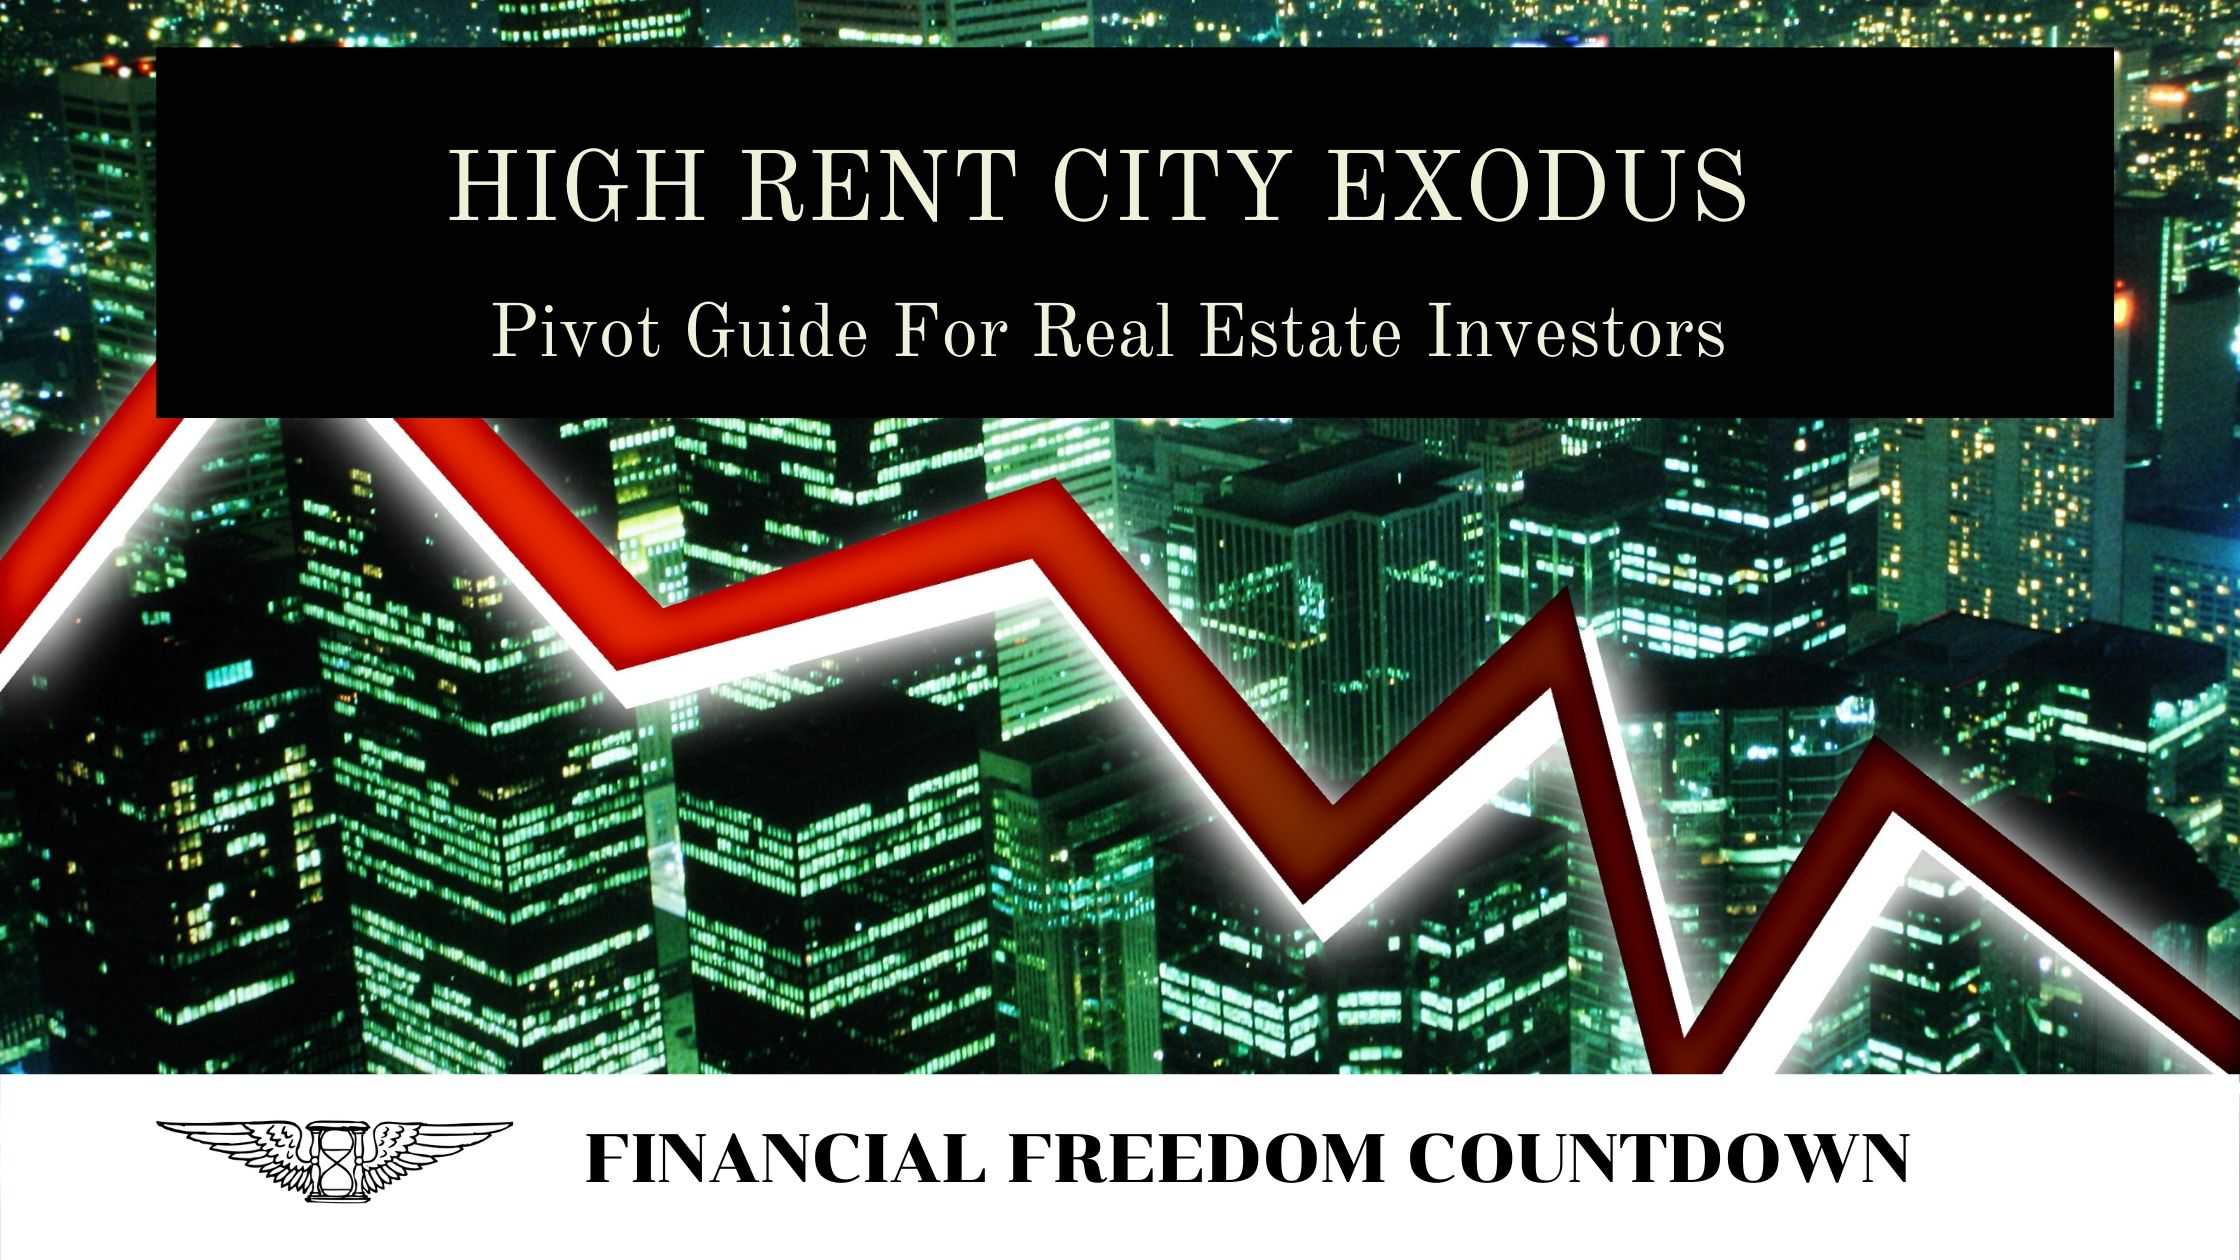 Pivot Guide For Real Estate Investors